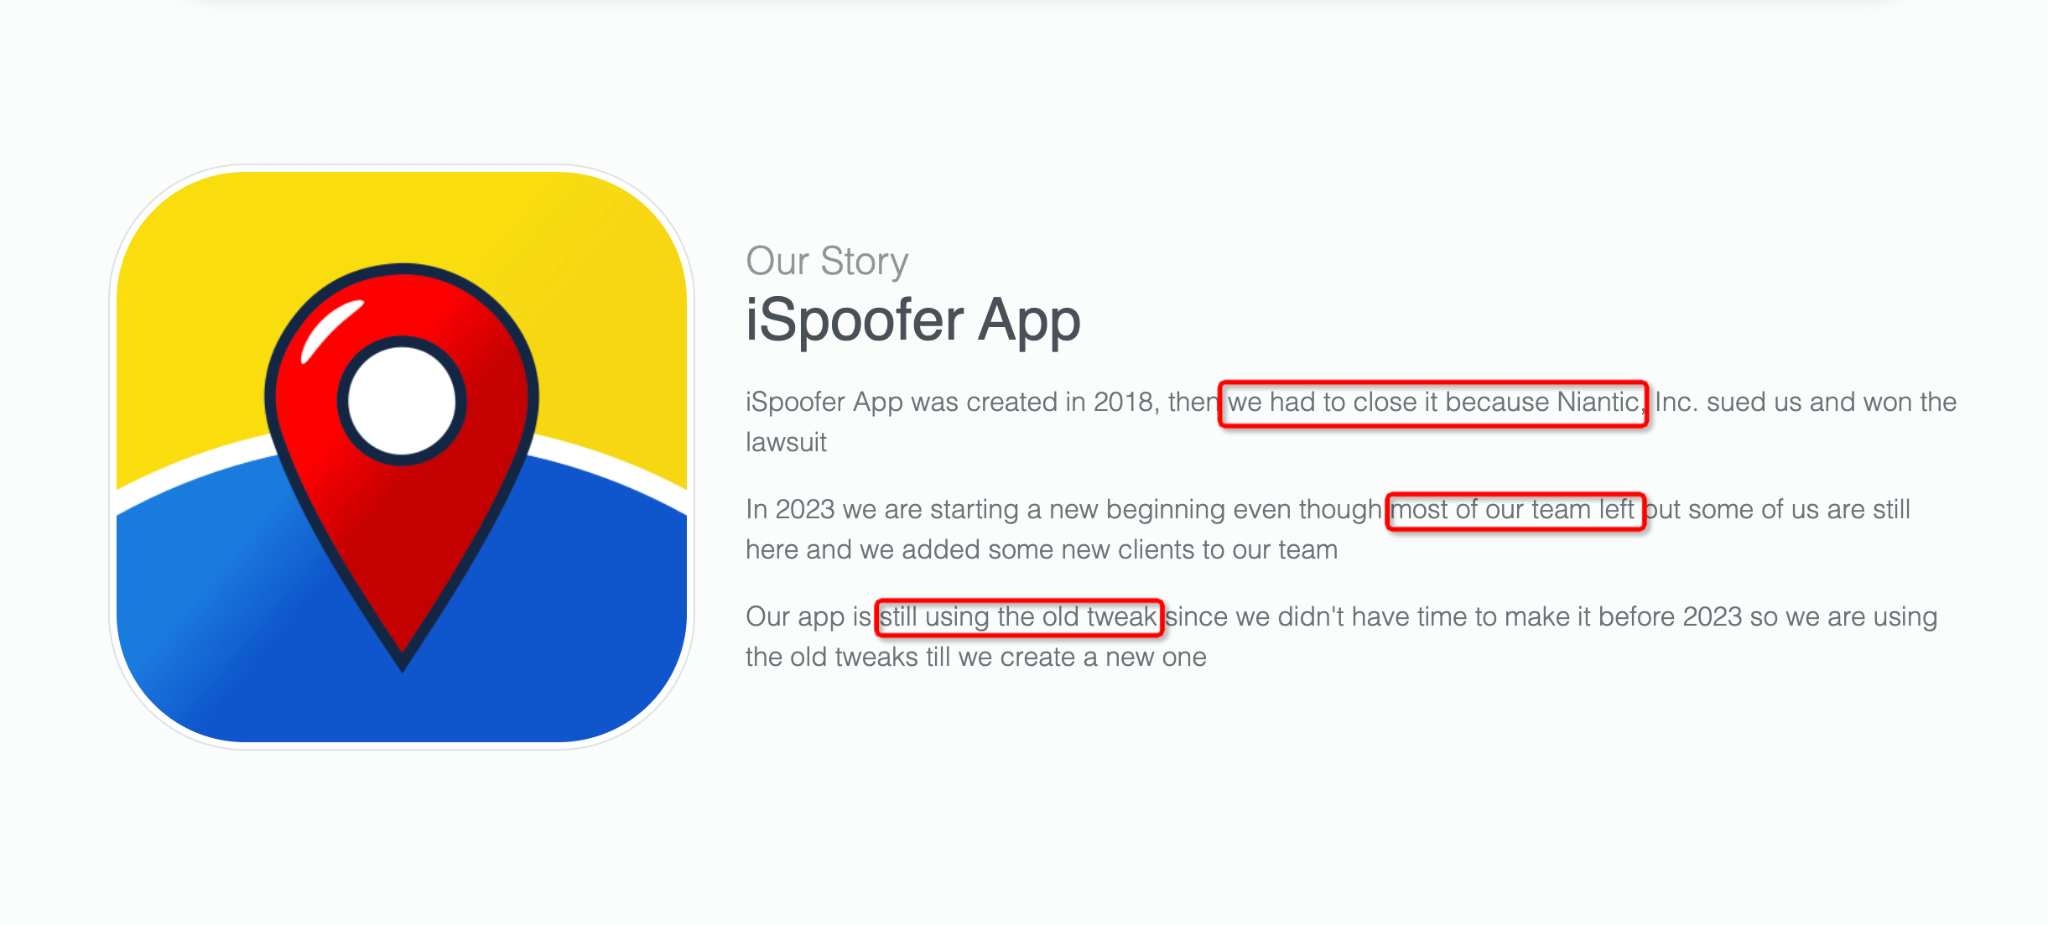 iSpoofer App Website Our Story